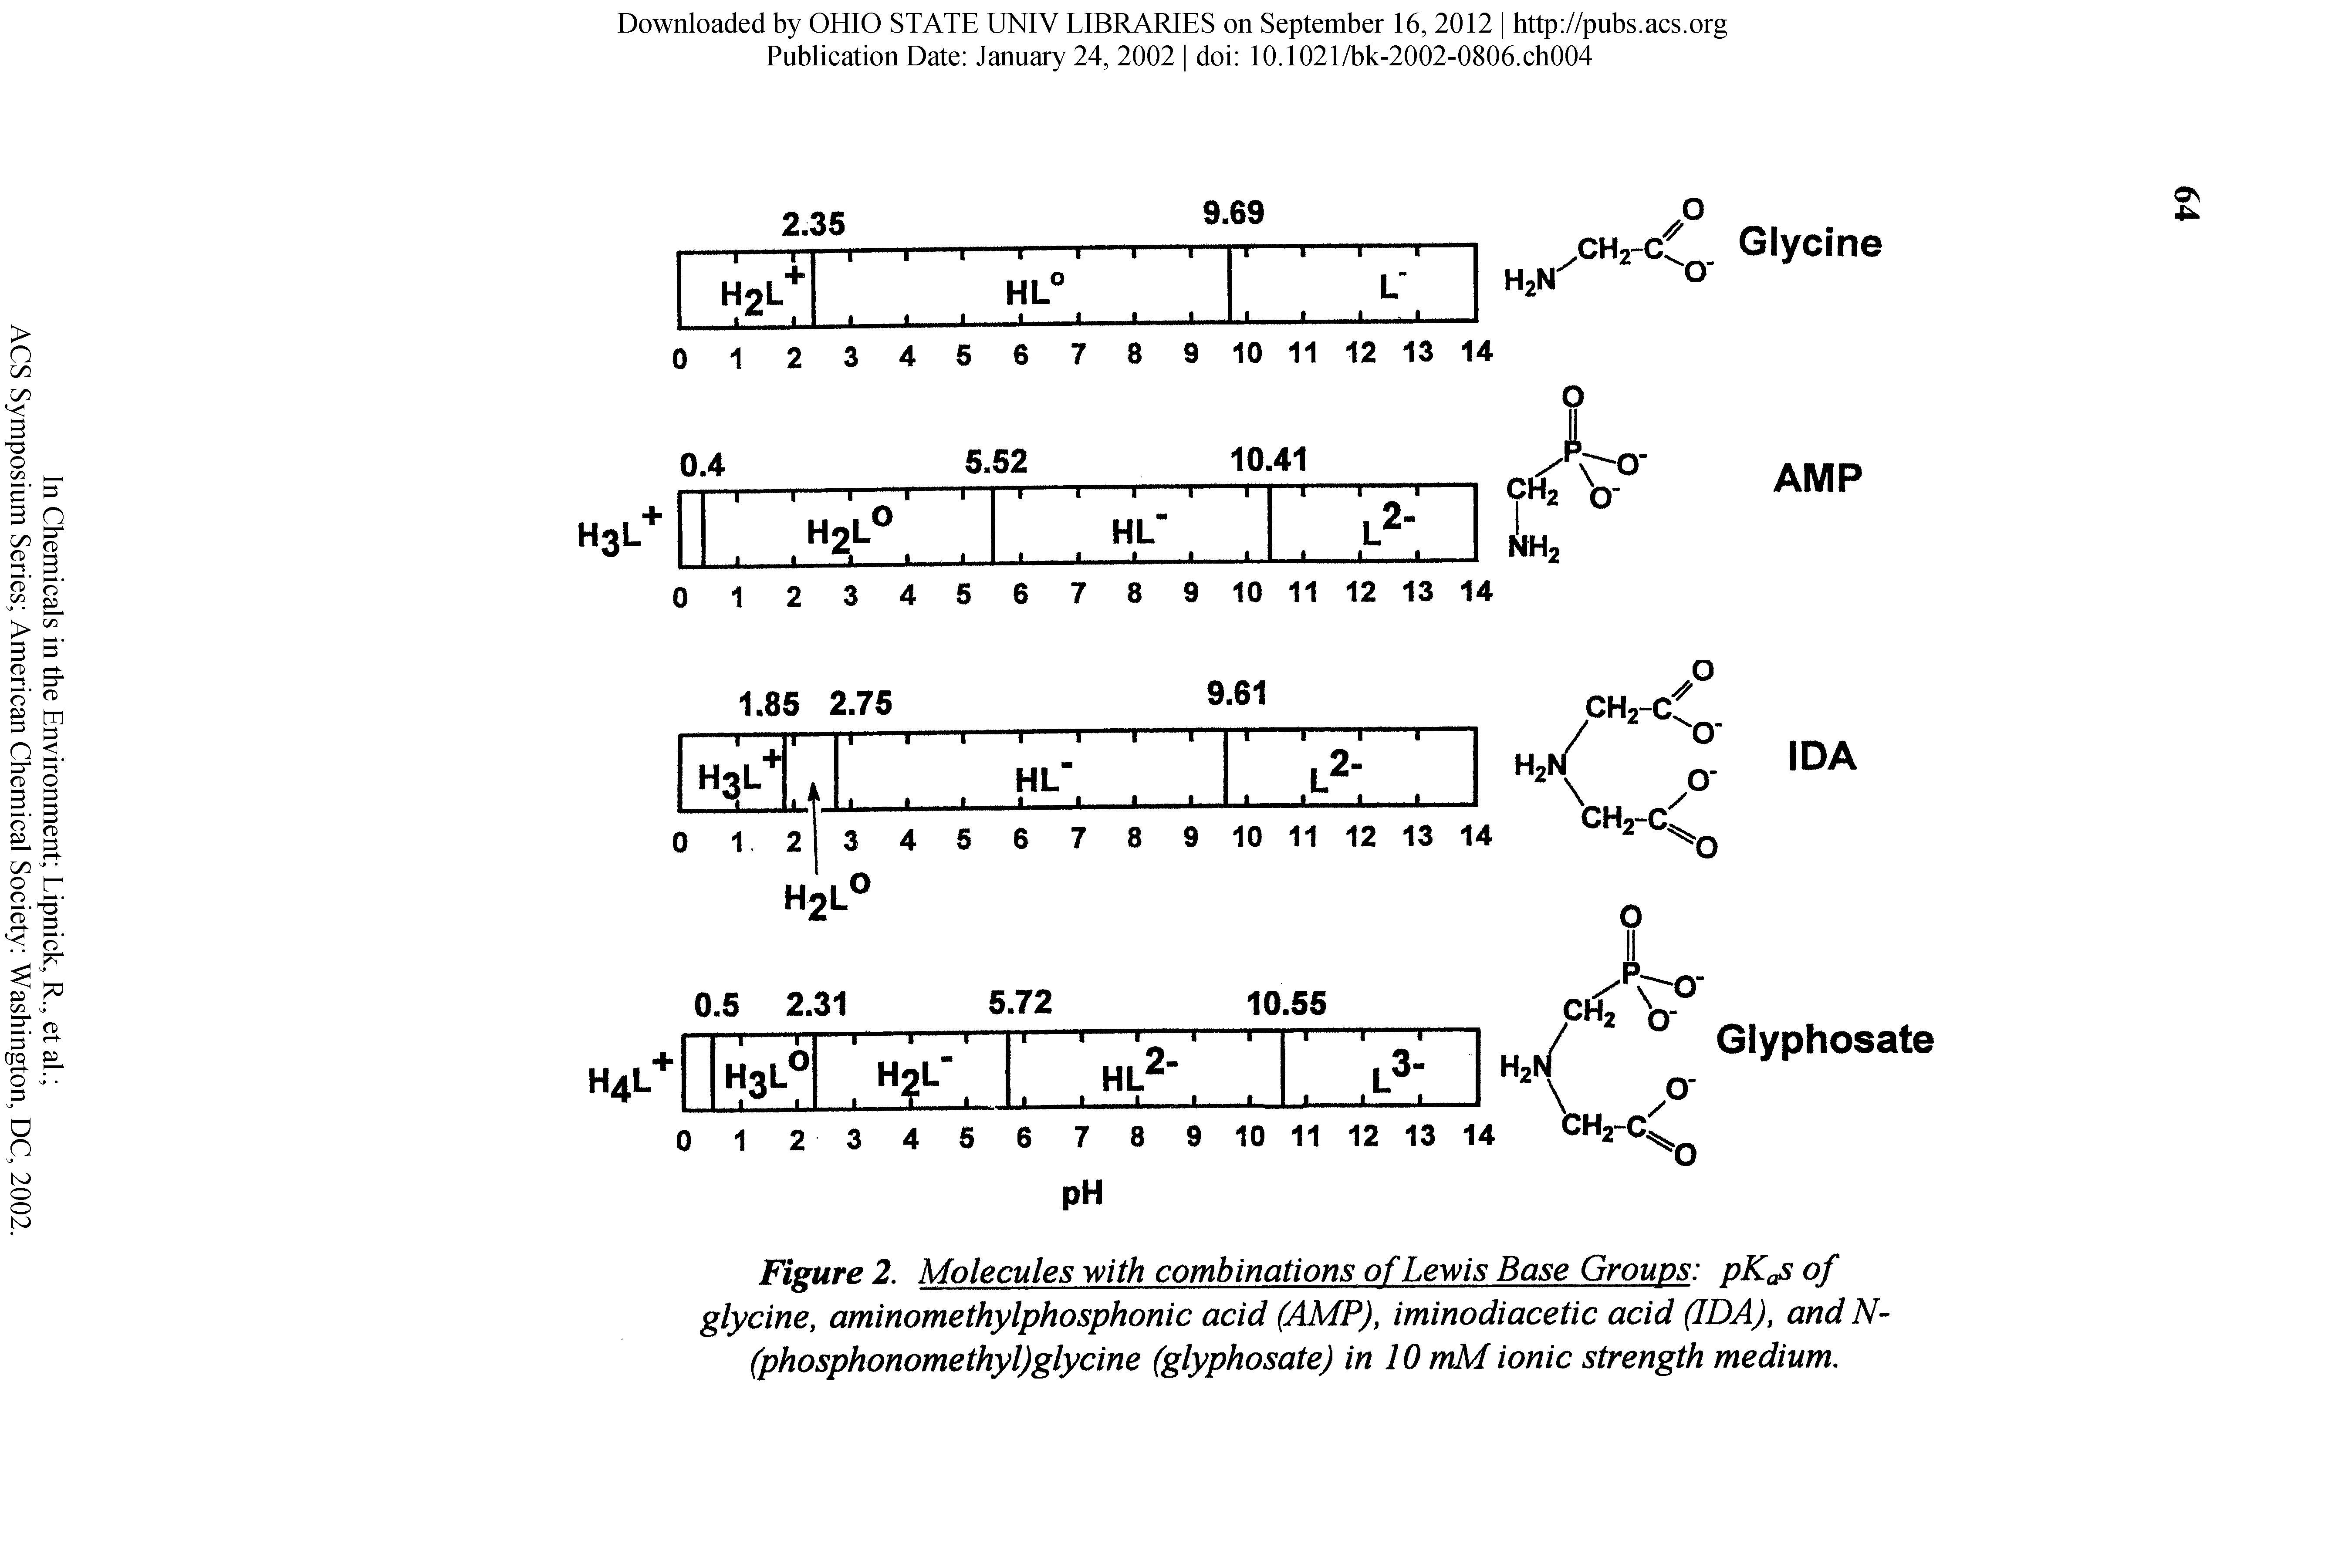 Figure . Molecules with combinations of Lewis Base Groups pKaSof glycine, aminomethylphosphonic acid (AMP), iminodiacetic acid (IDA), andN-(phosphonomethyl)glycine (giyphosate) in lOmM ionic strength medium.